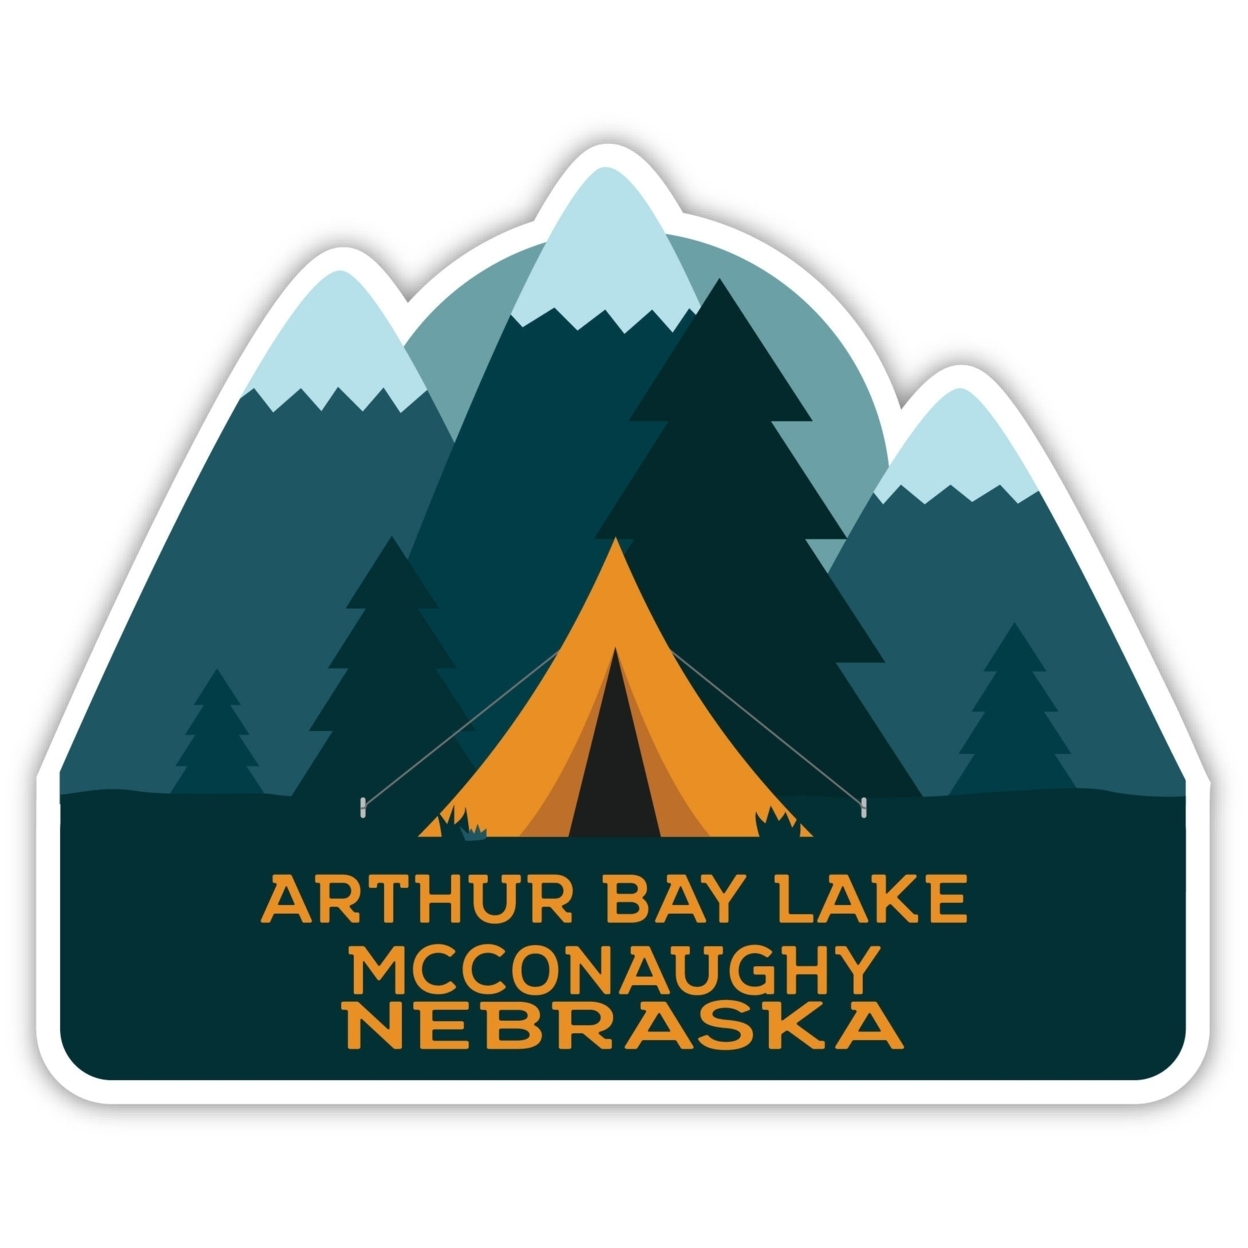 Arthur Bay Lake Mcconaughy Nebraska Souvenir Decorative Stickers (Choose Theme And Size) - 4-Pack, 6-Inch, Tent